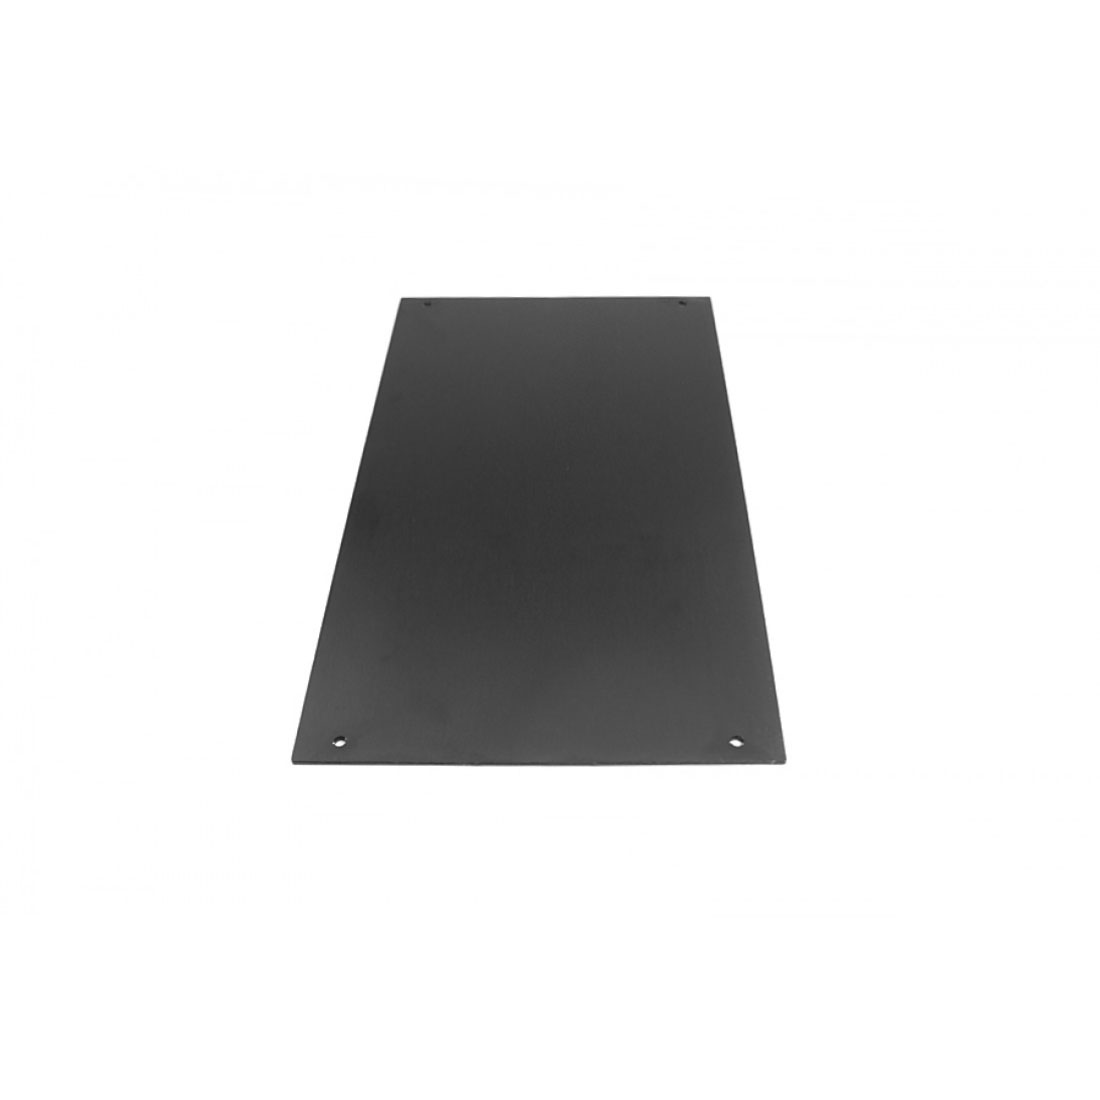 1NPDA05300N - 5U Krabice s chladičem, 300mm, 10mm-panel černý, AL víka